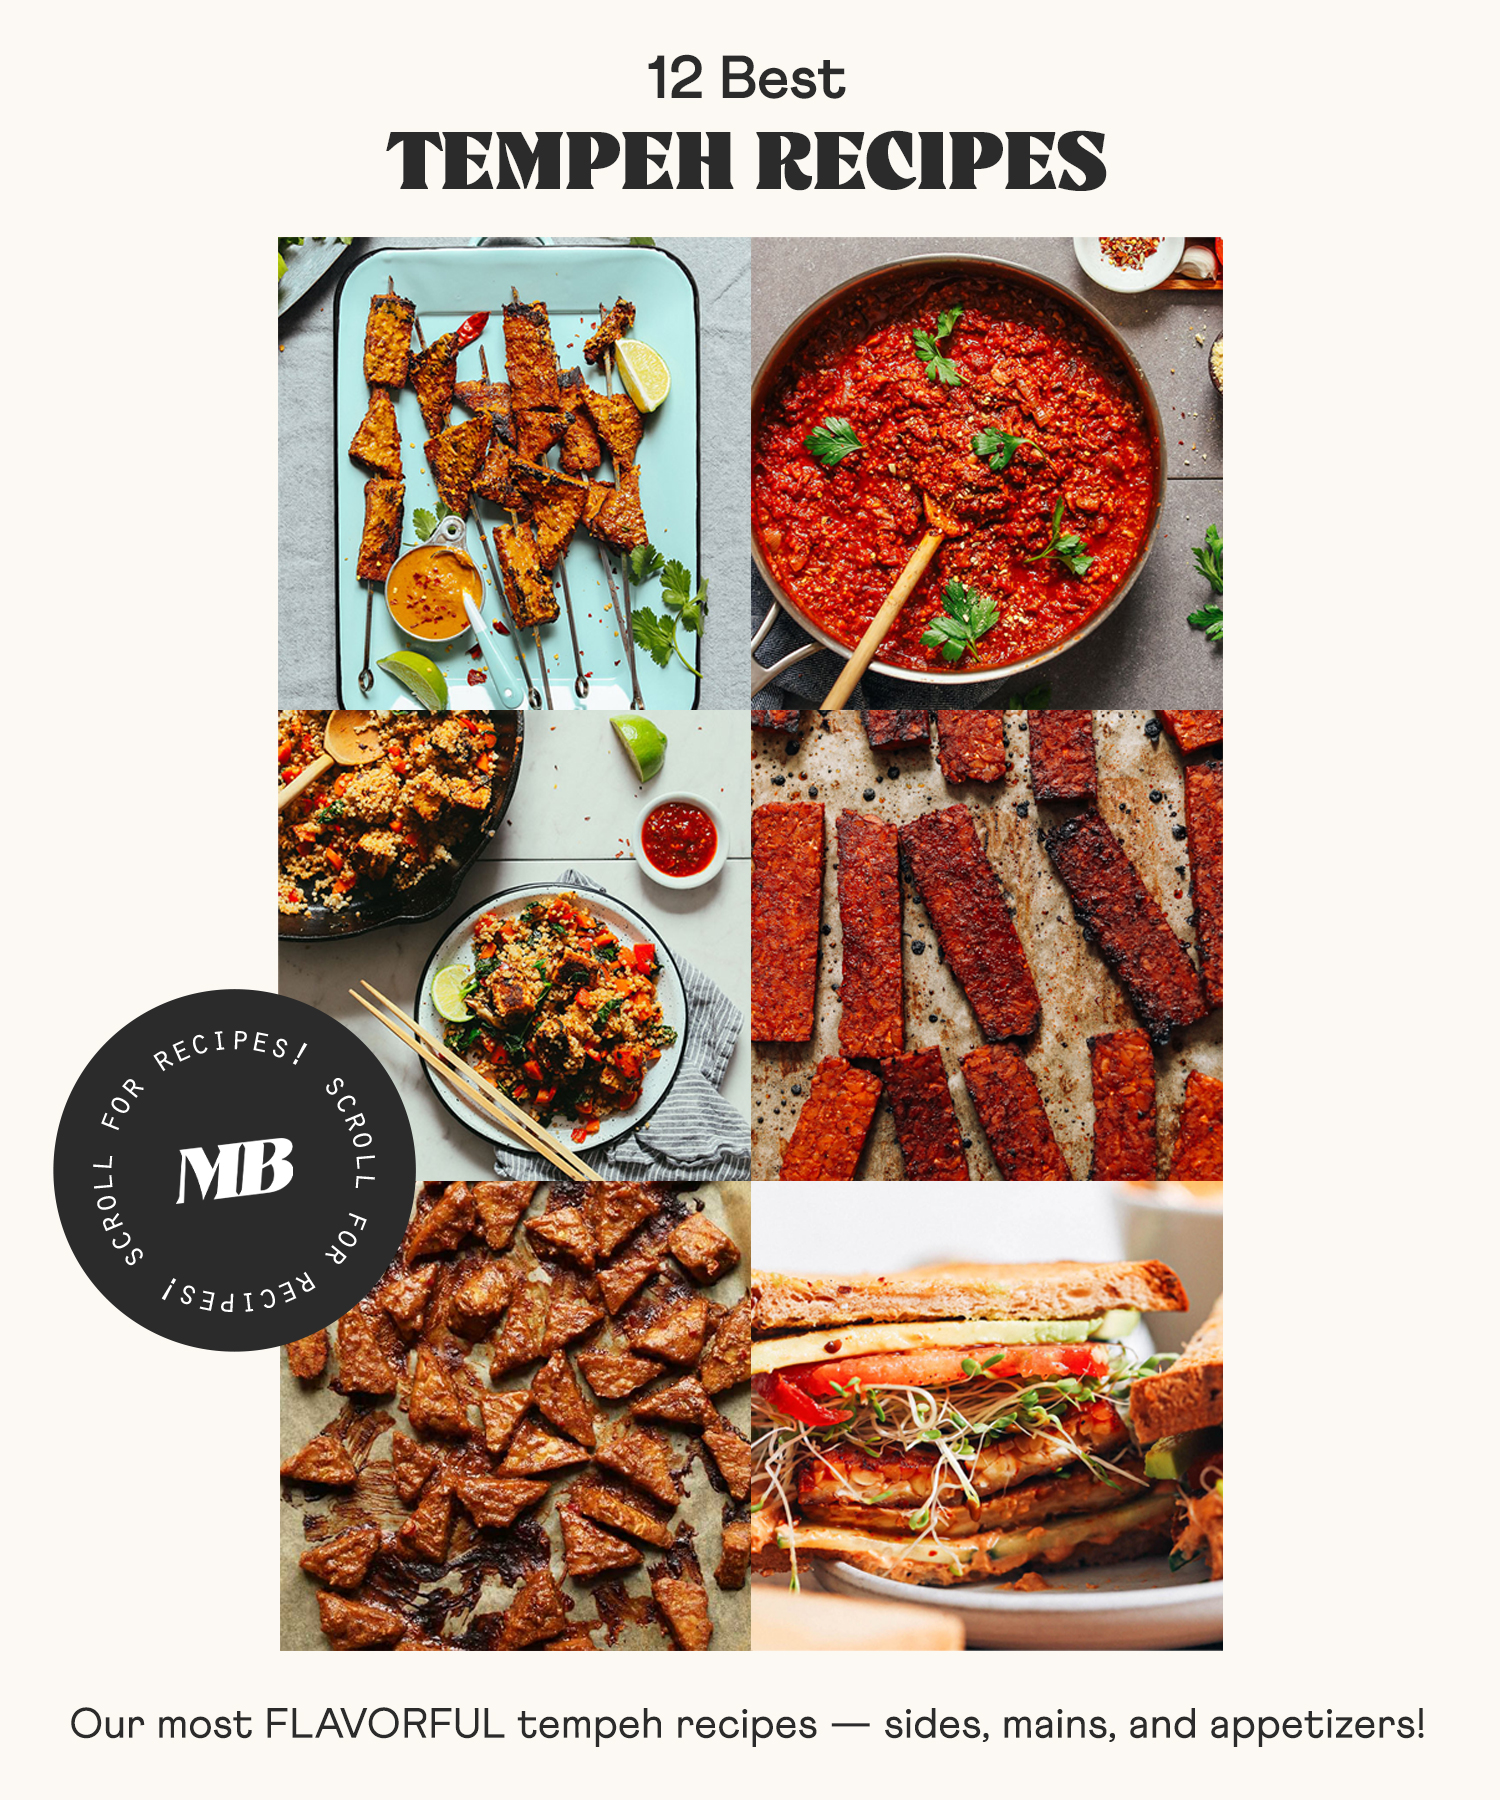 Assortment of photos of tempeh recipes